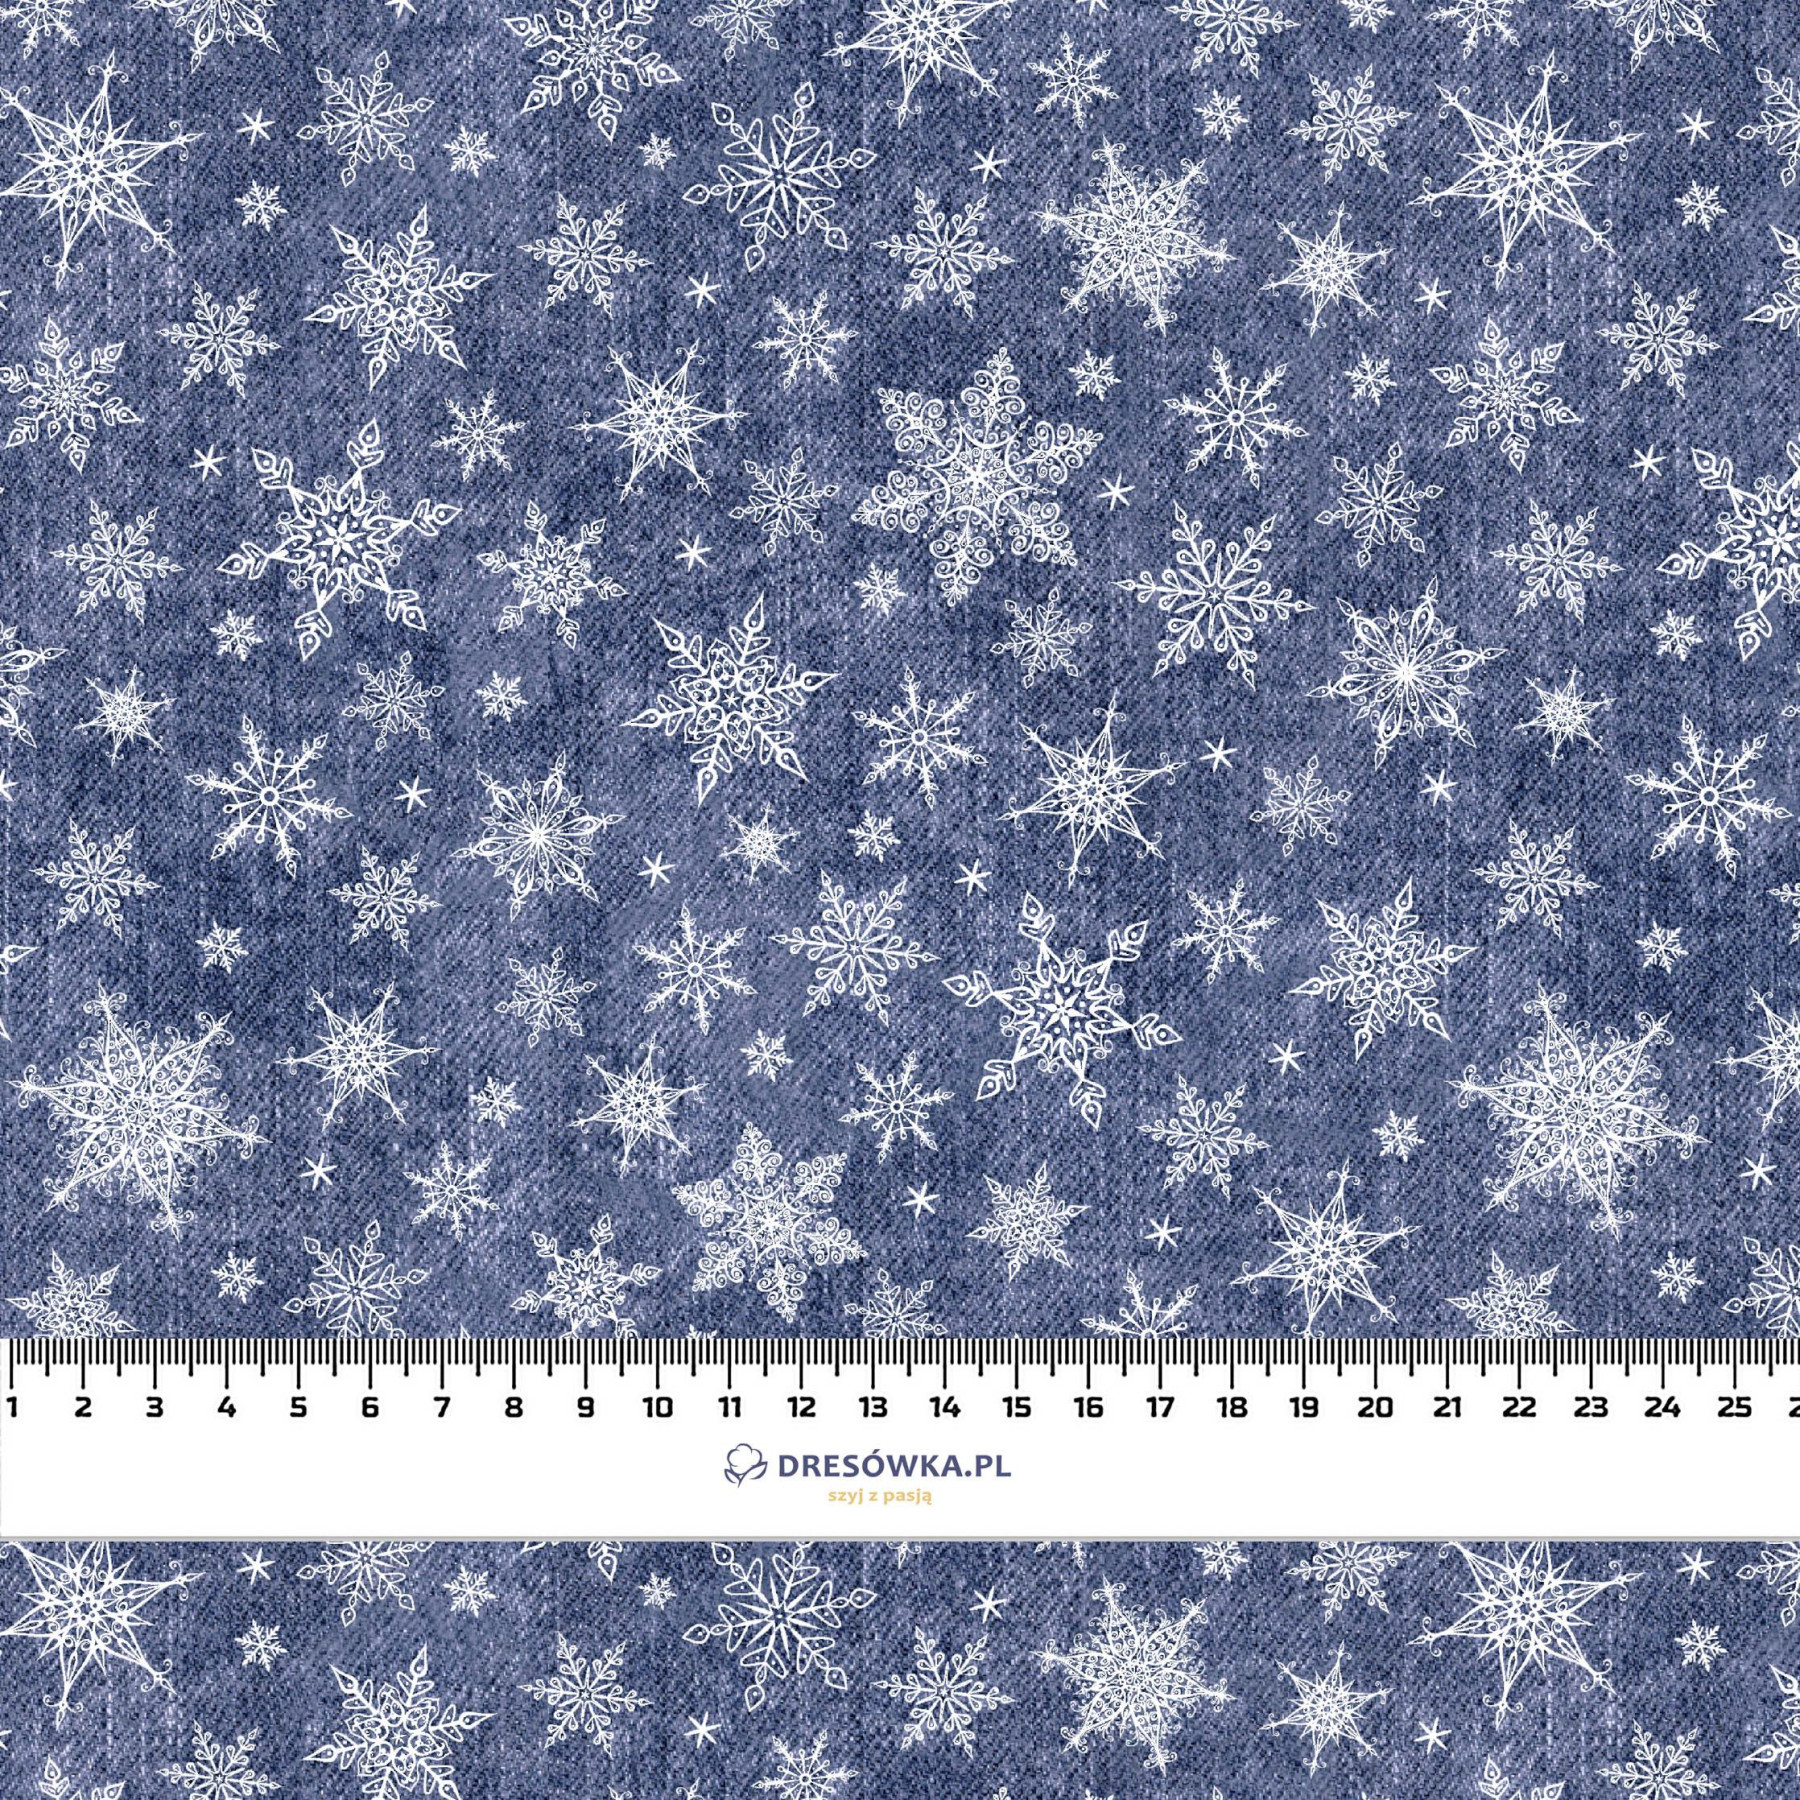 SNOWFLAKES PAT. 2 / ACID WASH DARK BLUE - looped knit fabric